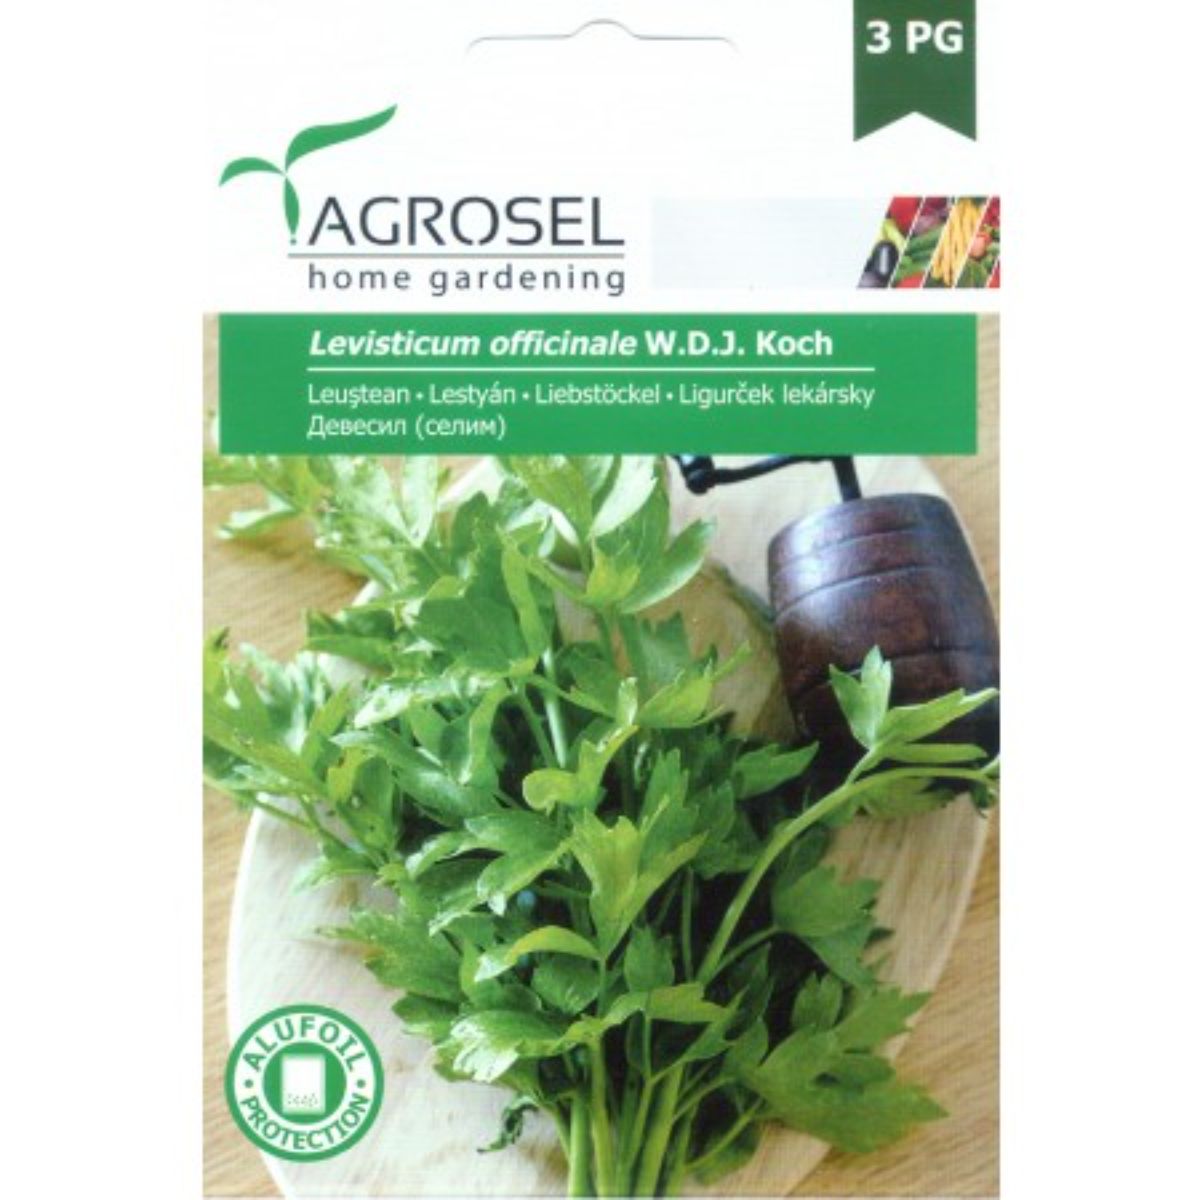 Seminte plante aromatice - Seminte aromatice Leustean  Agrosel 1.5 g, hectarul.ro